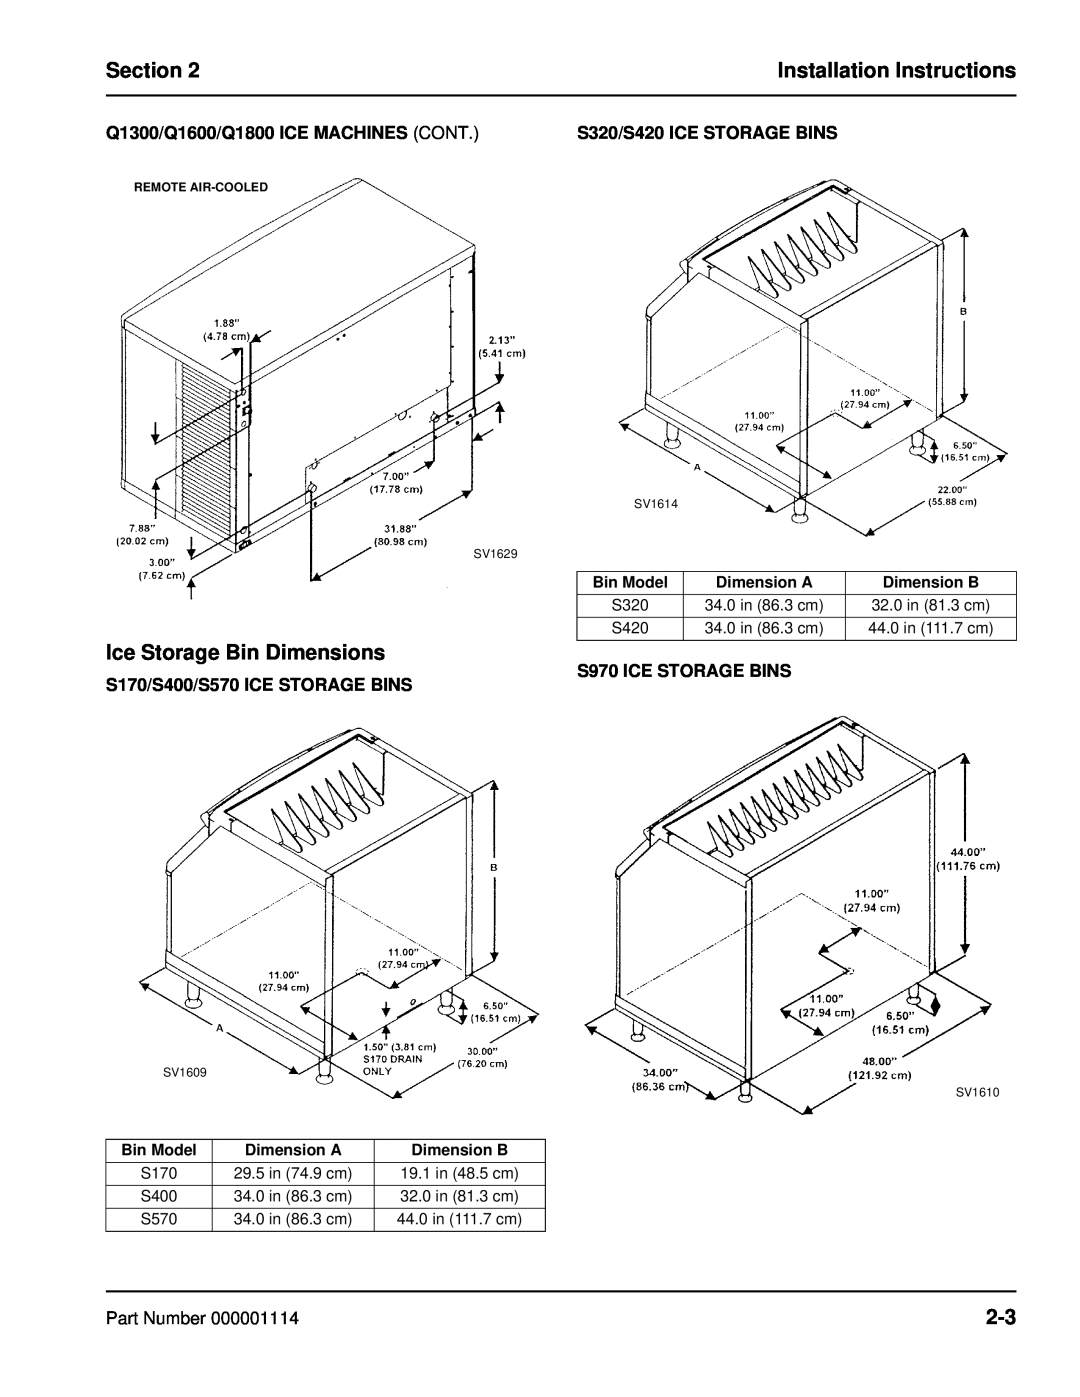 Manitowoc Ice Ice Storage Bin Dimensions, Q1300/Q1600/Q1800 ICE MACHINES CONT, S320/S420 ICE STORAGE BINS, Section 